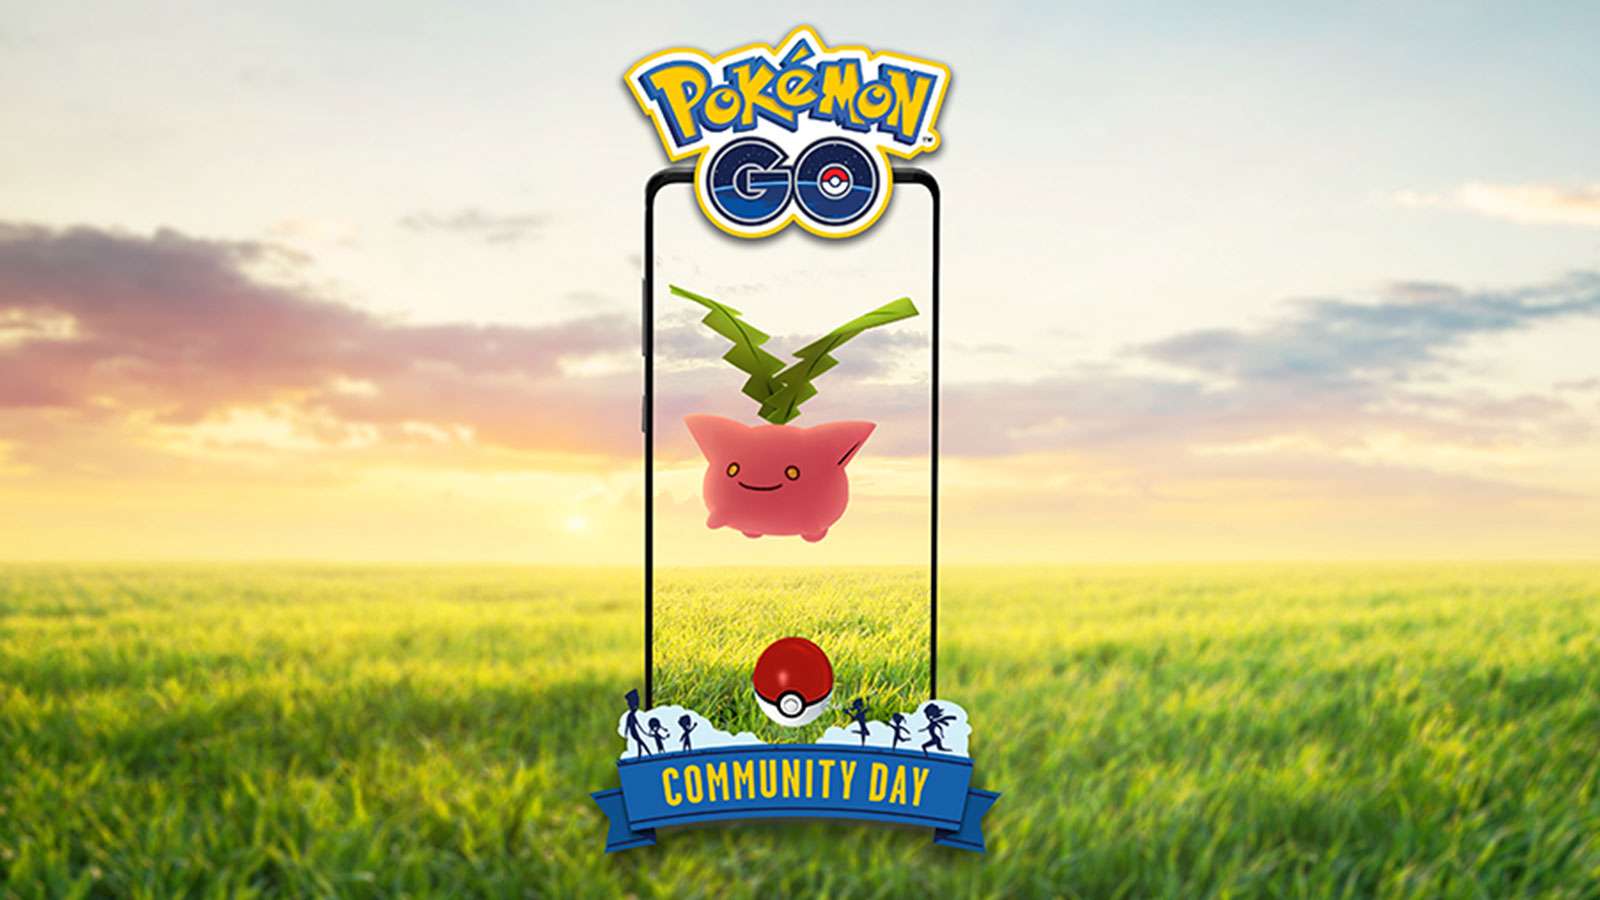 journée communauté granivol pokémon Go